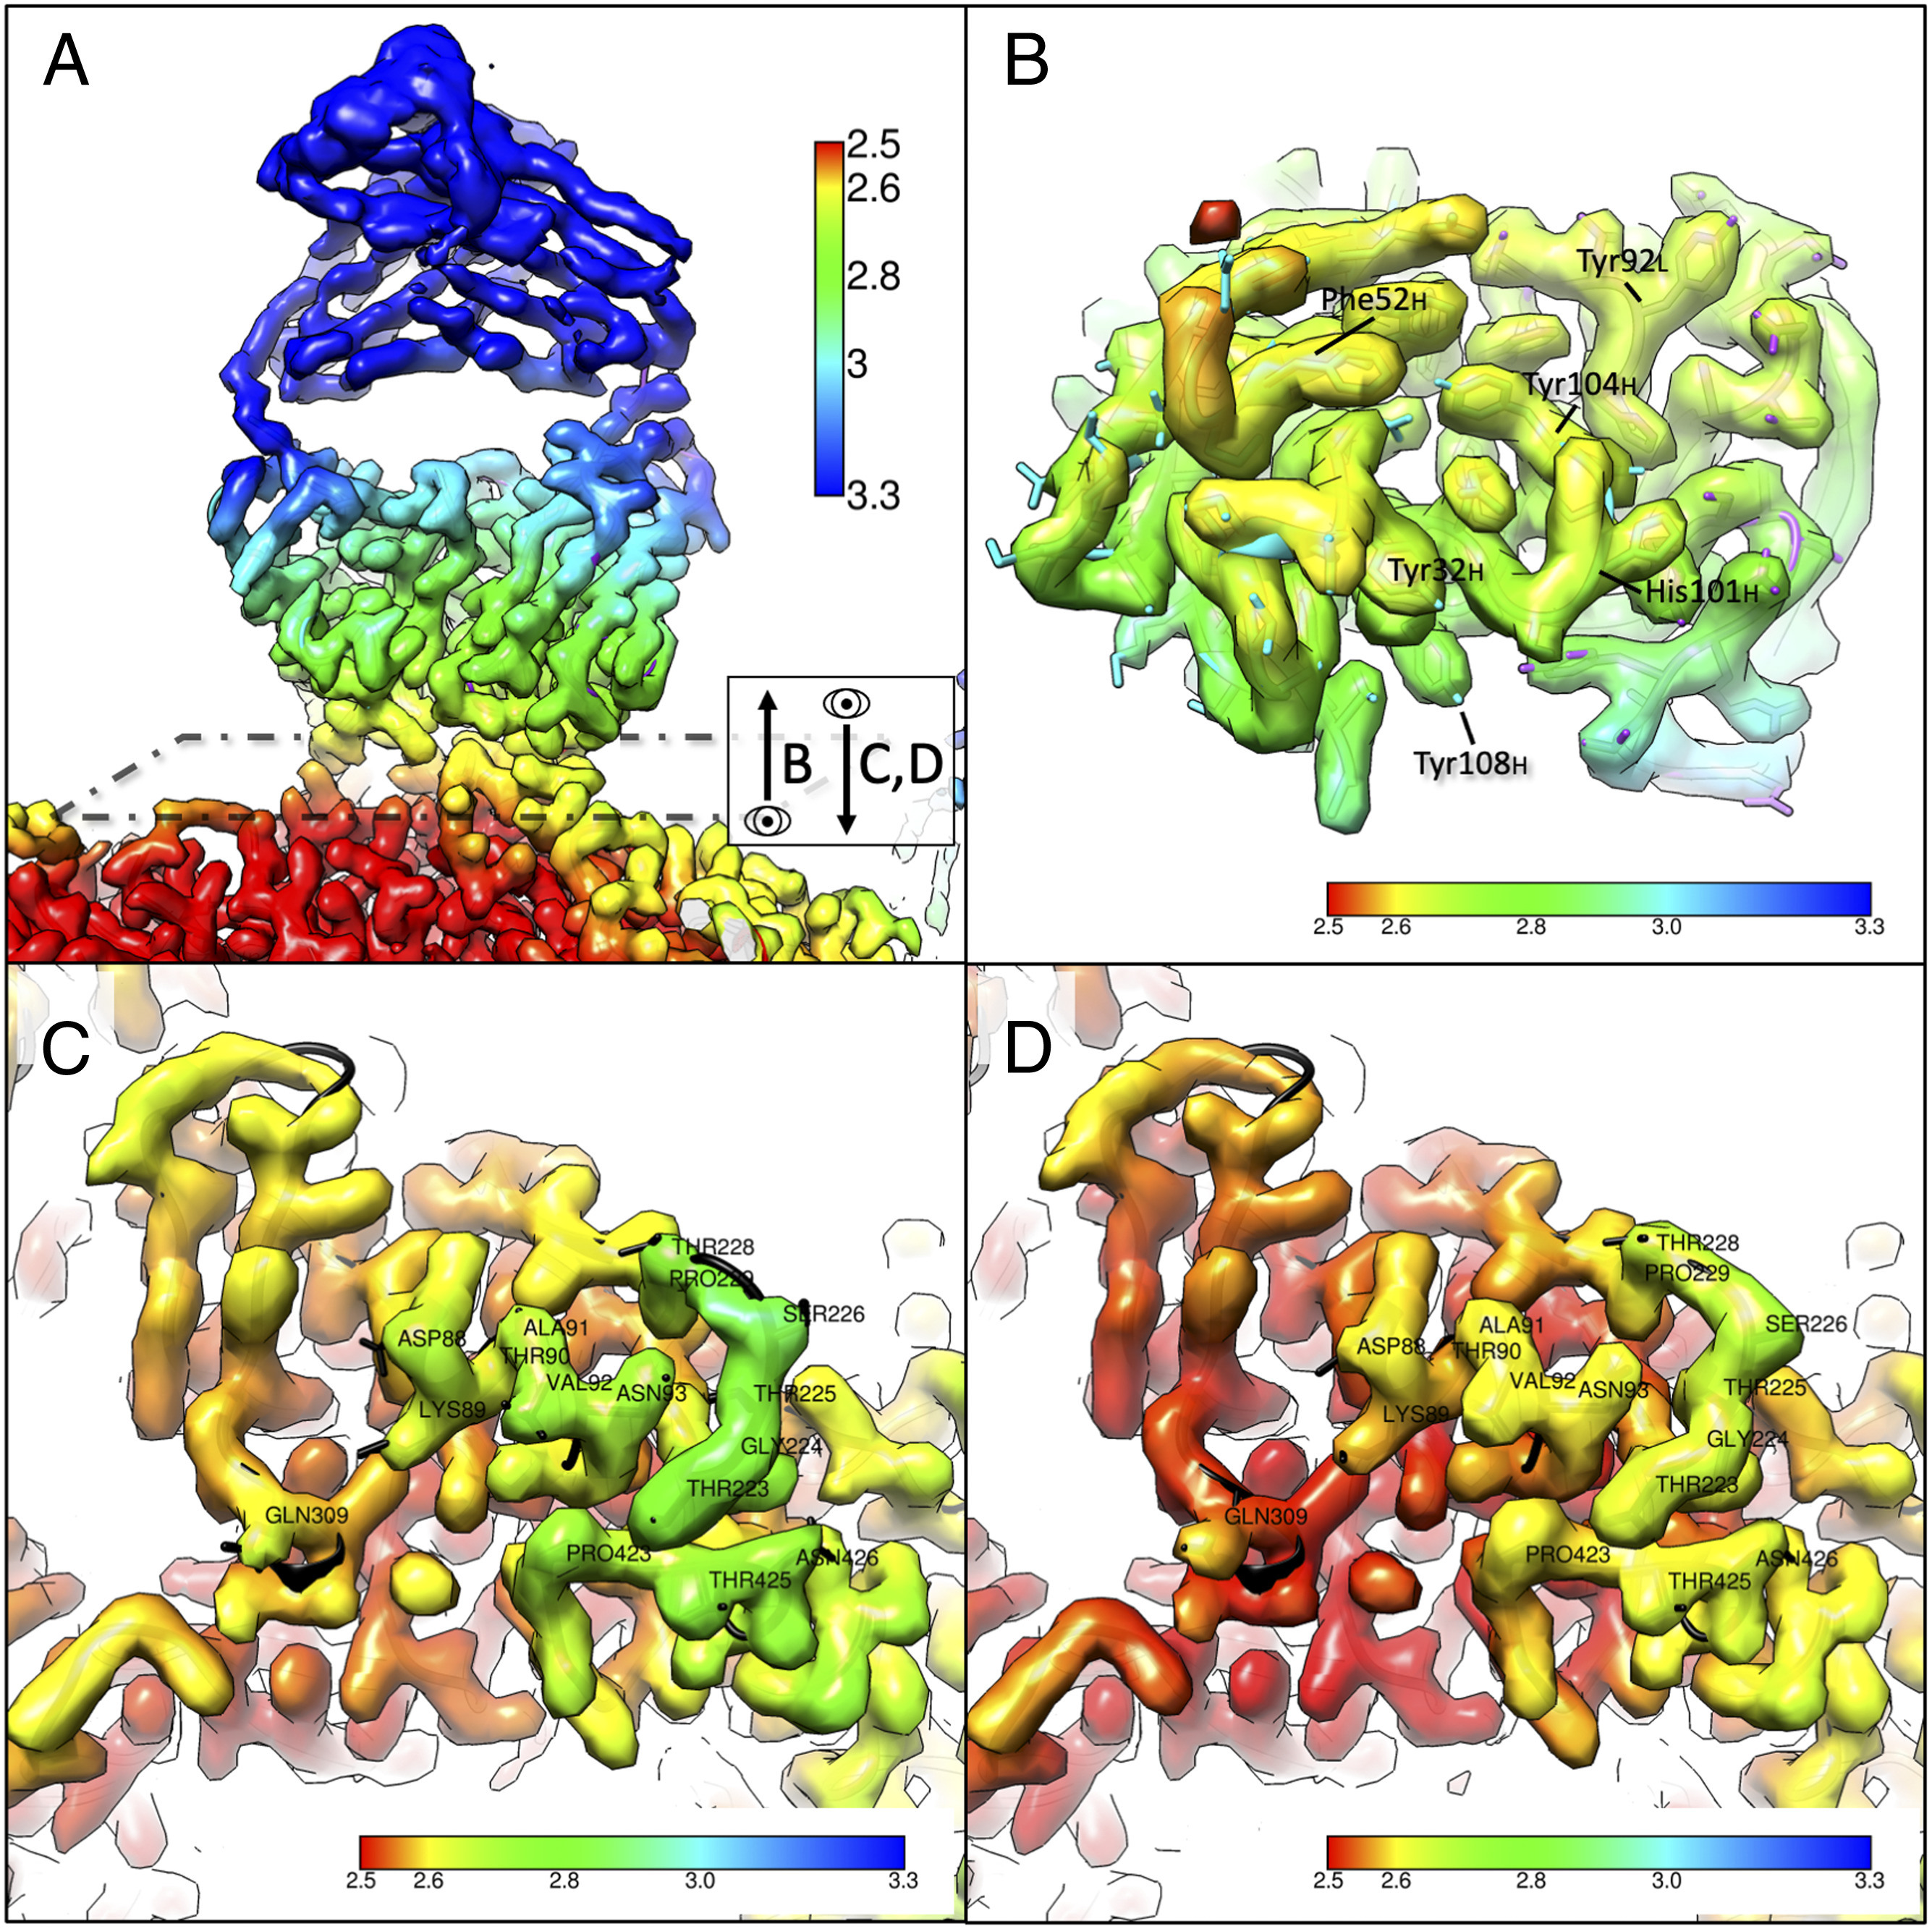 High-resolution asymmetric structure of a Fab-virus complex